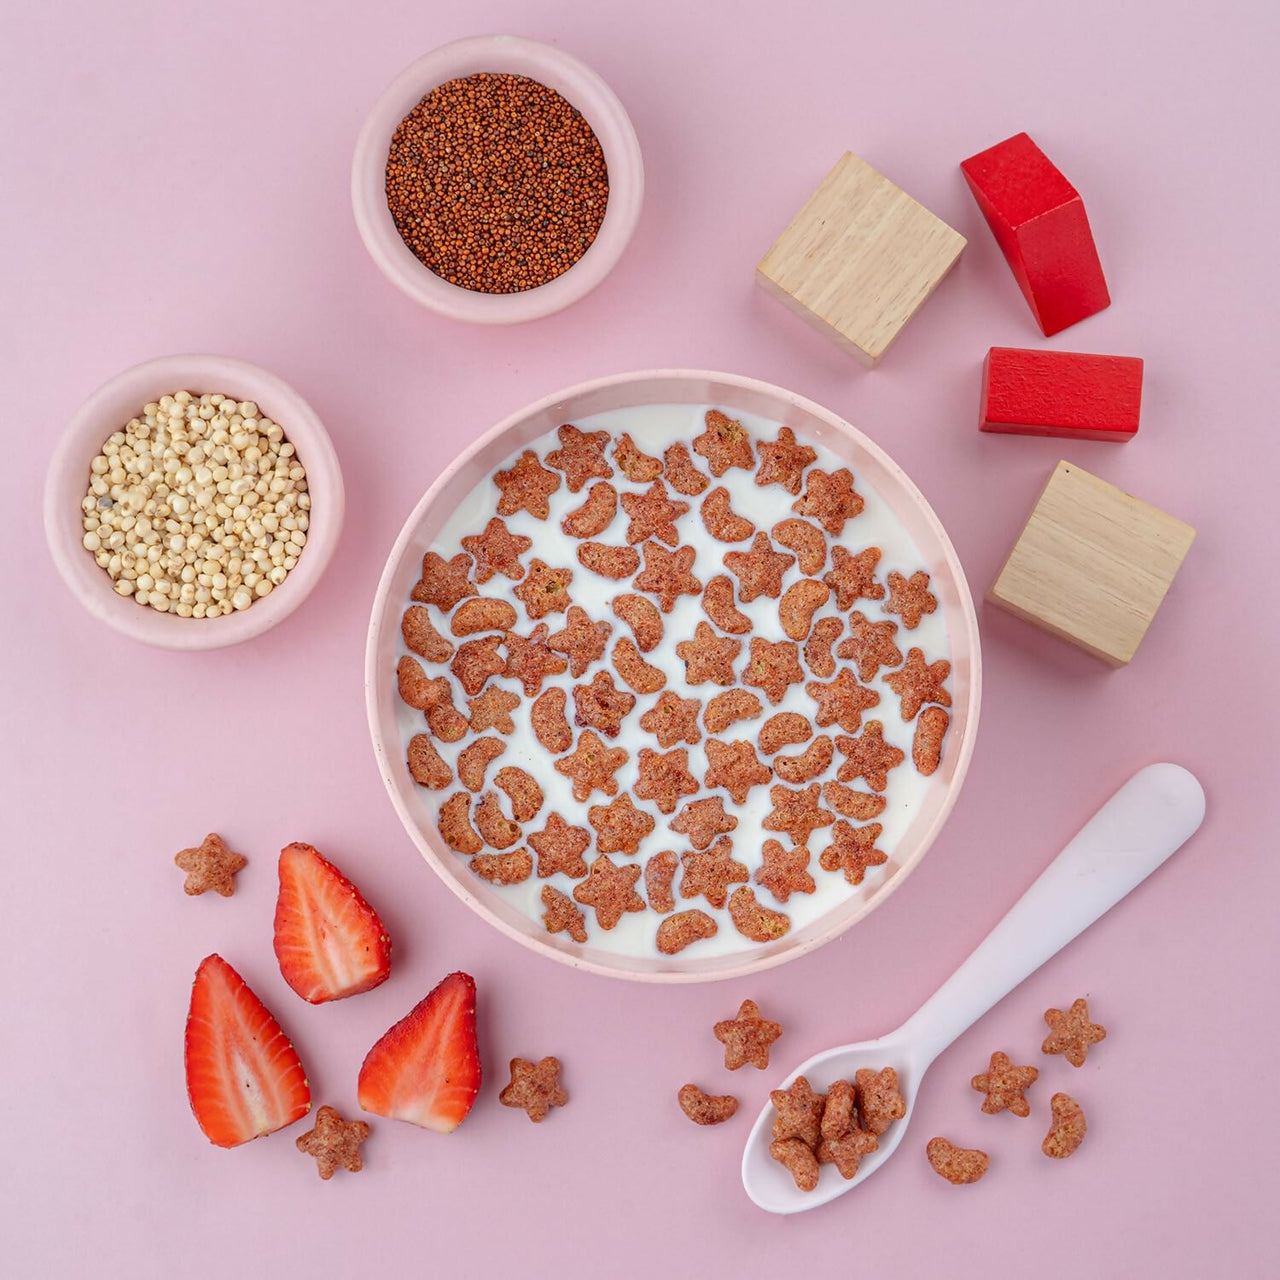 Slurrp Farm Berry Crunch Strawberry Cereal (Ragi Stars & Moons) - Distacart